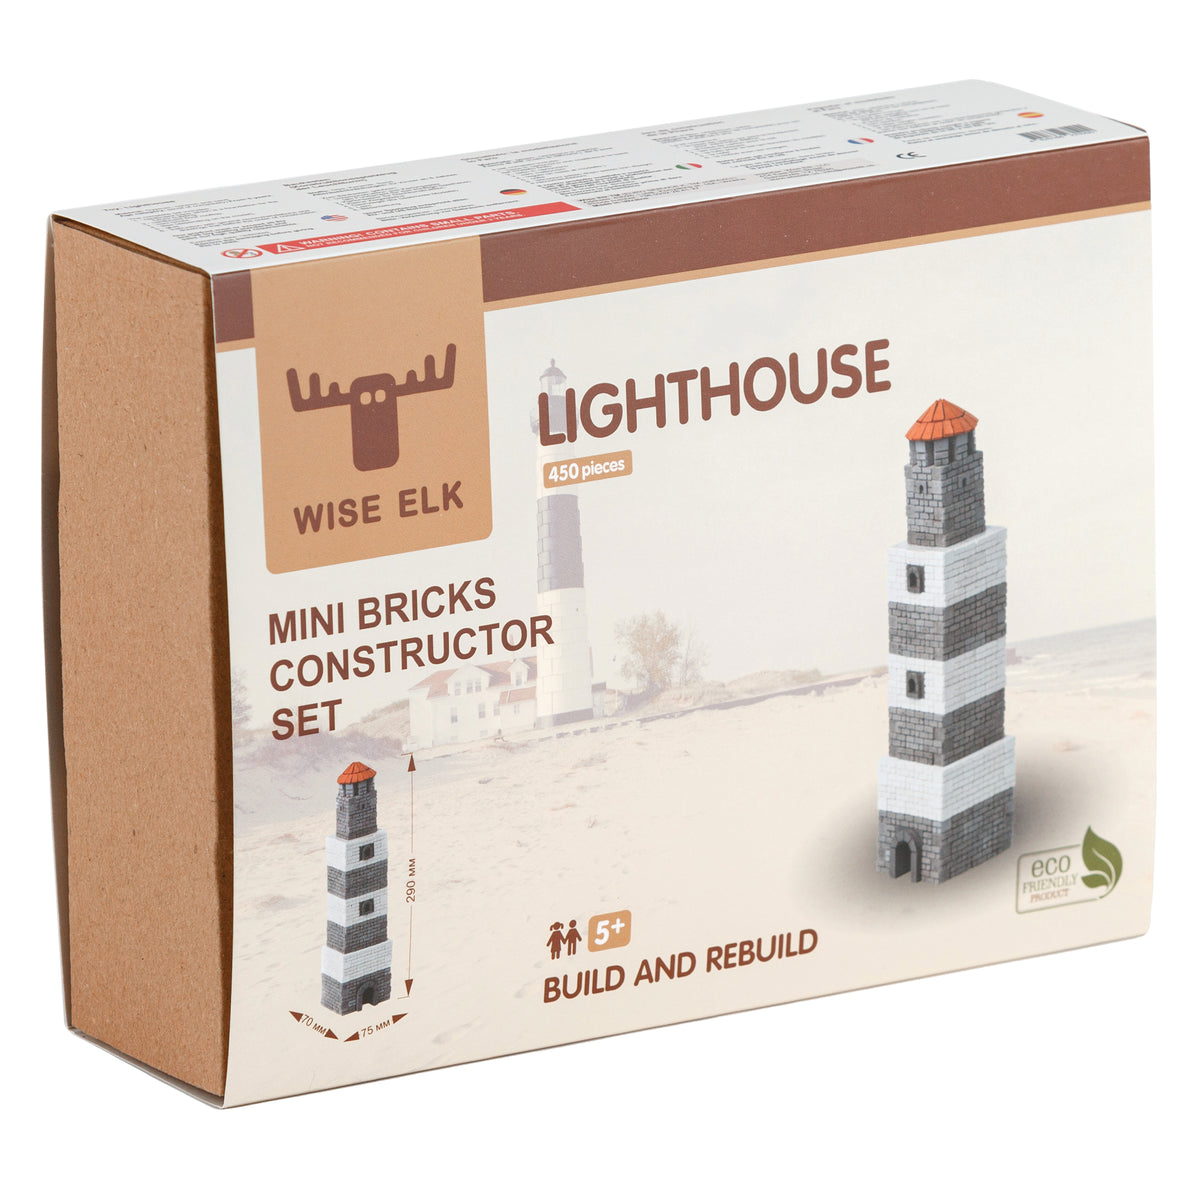 Wise Elk Mini Bricks Constructor Lighthouse North Shore